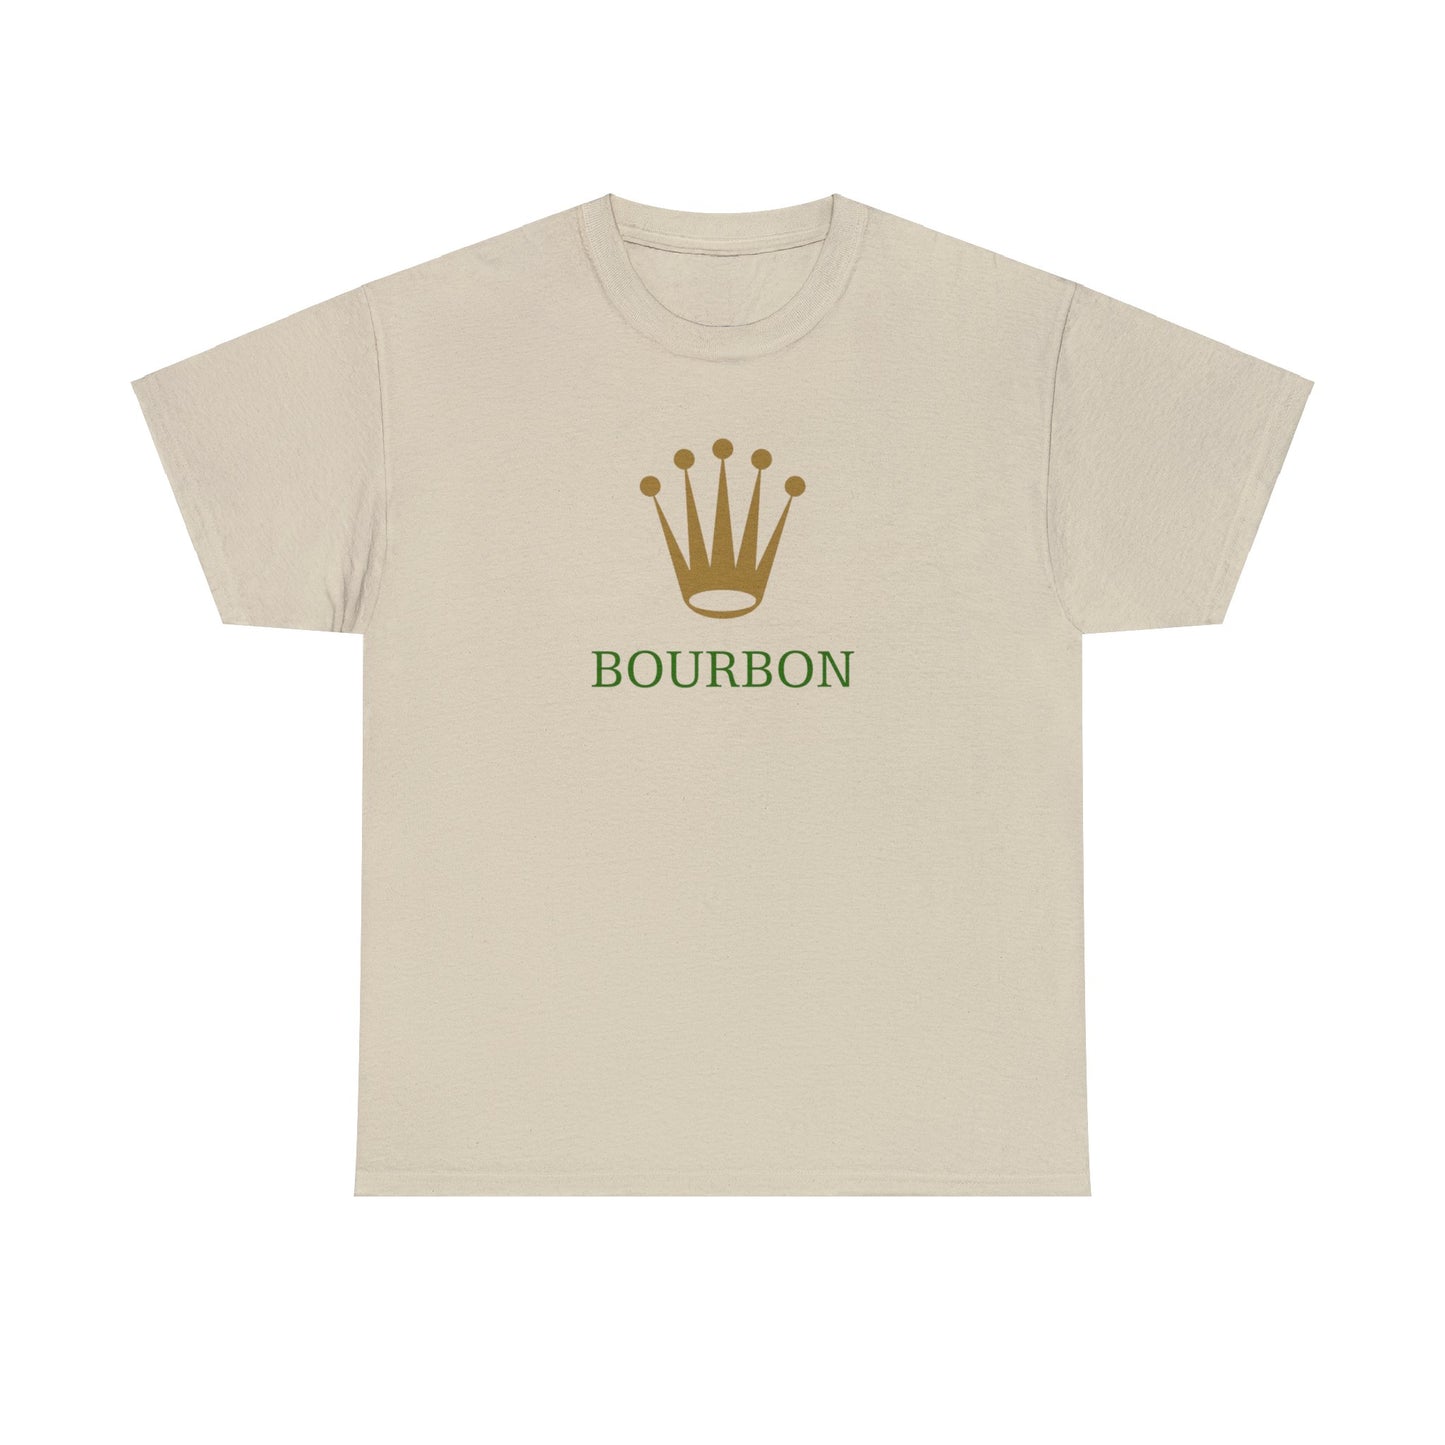 Bourbon is King